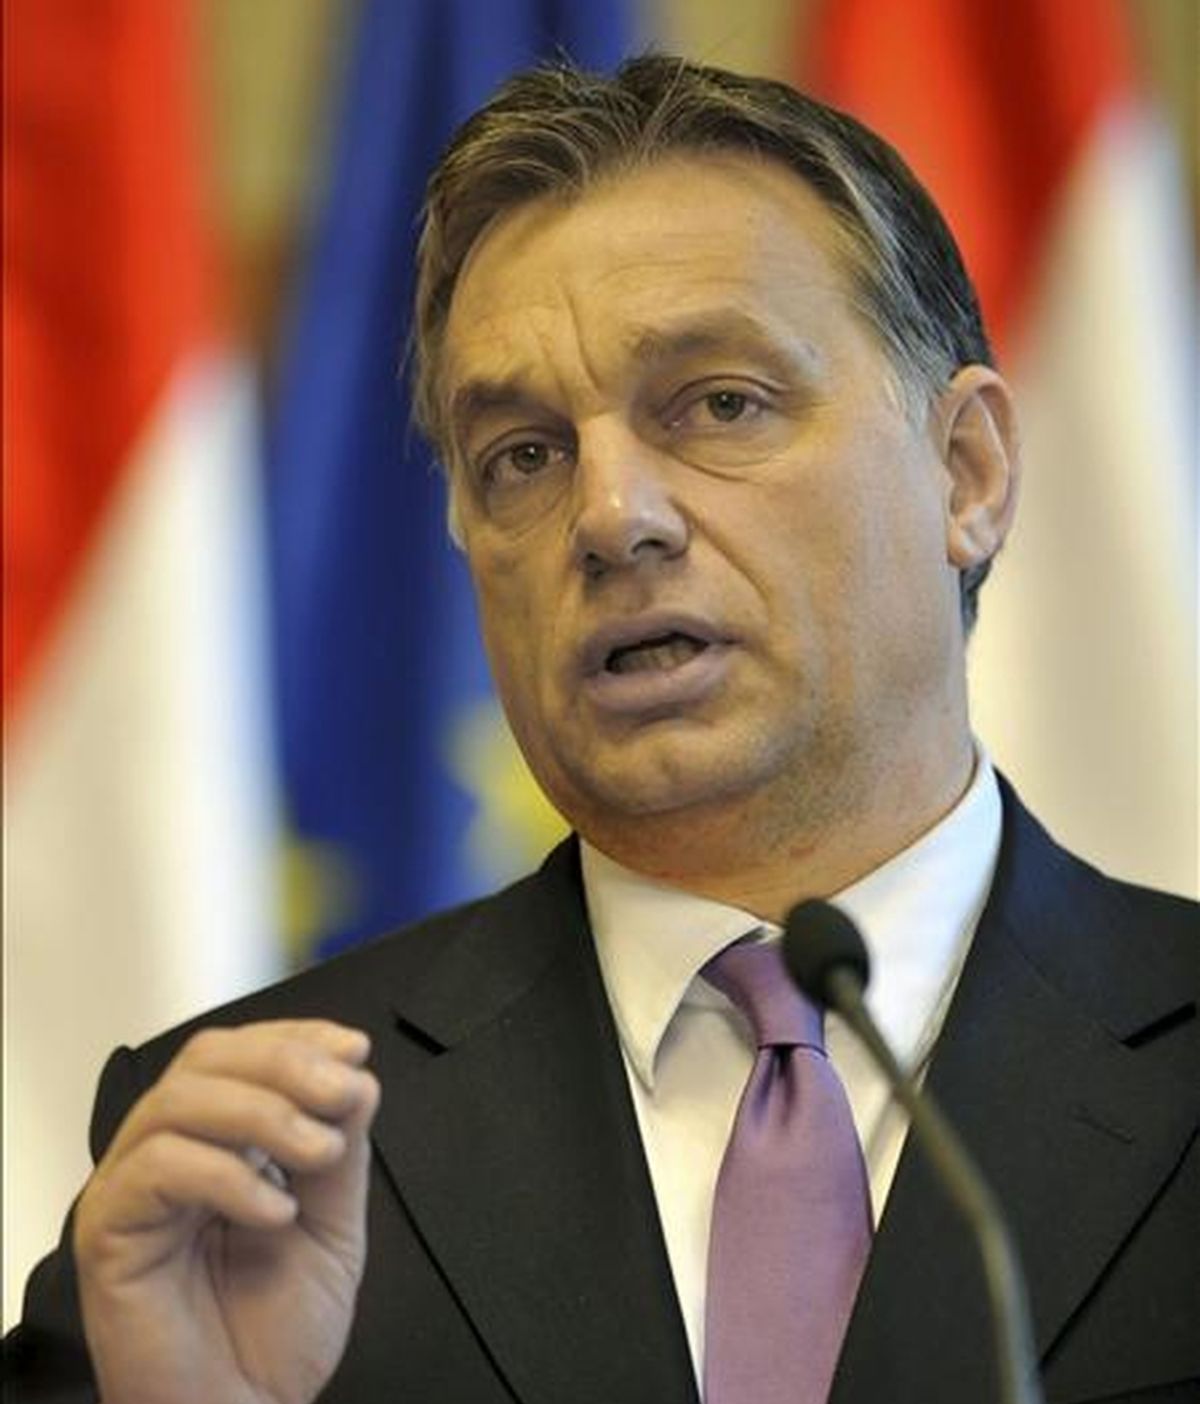 El primer ministro húngaro, Viktor Orban. EFE/Archivo